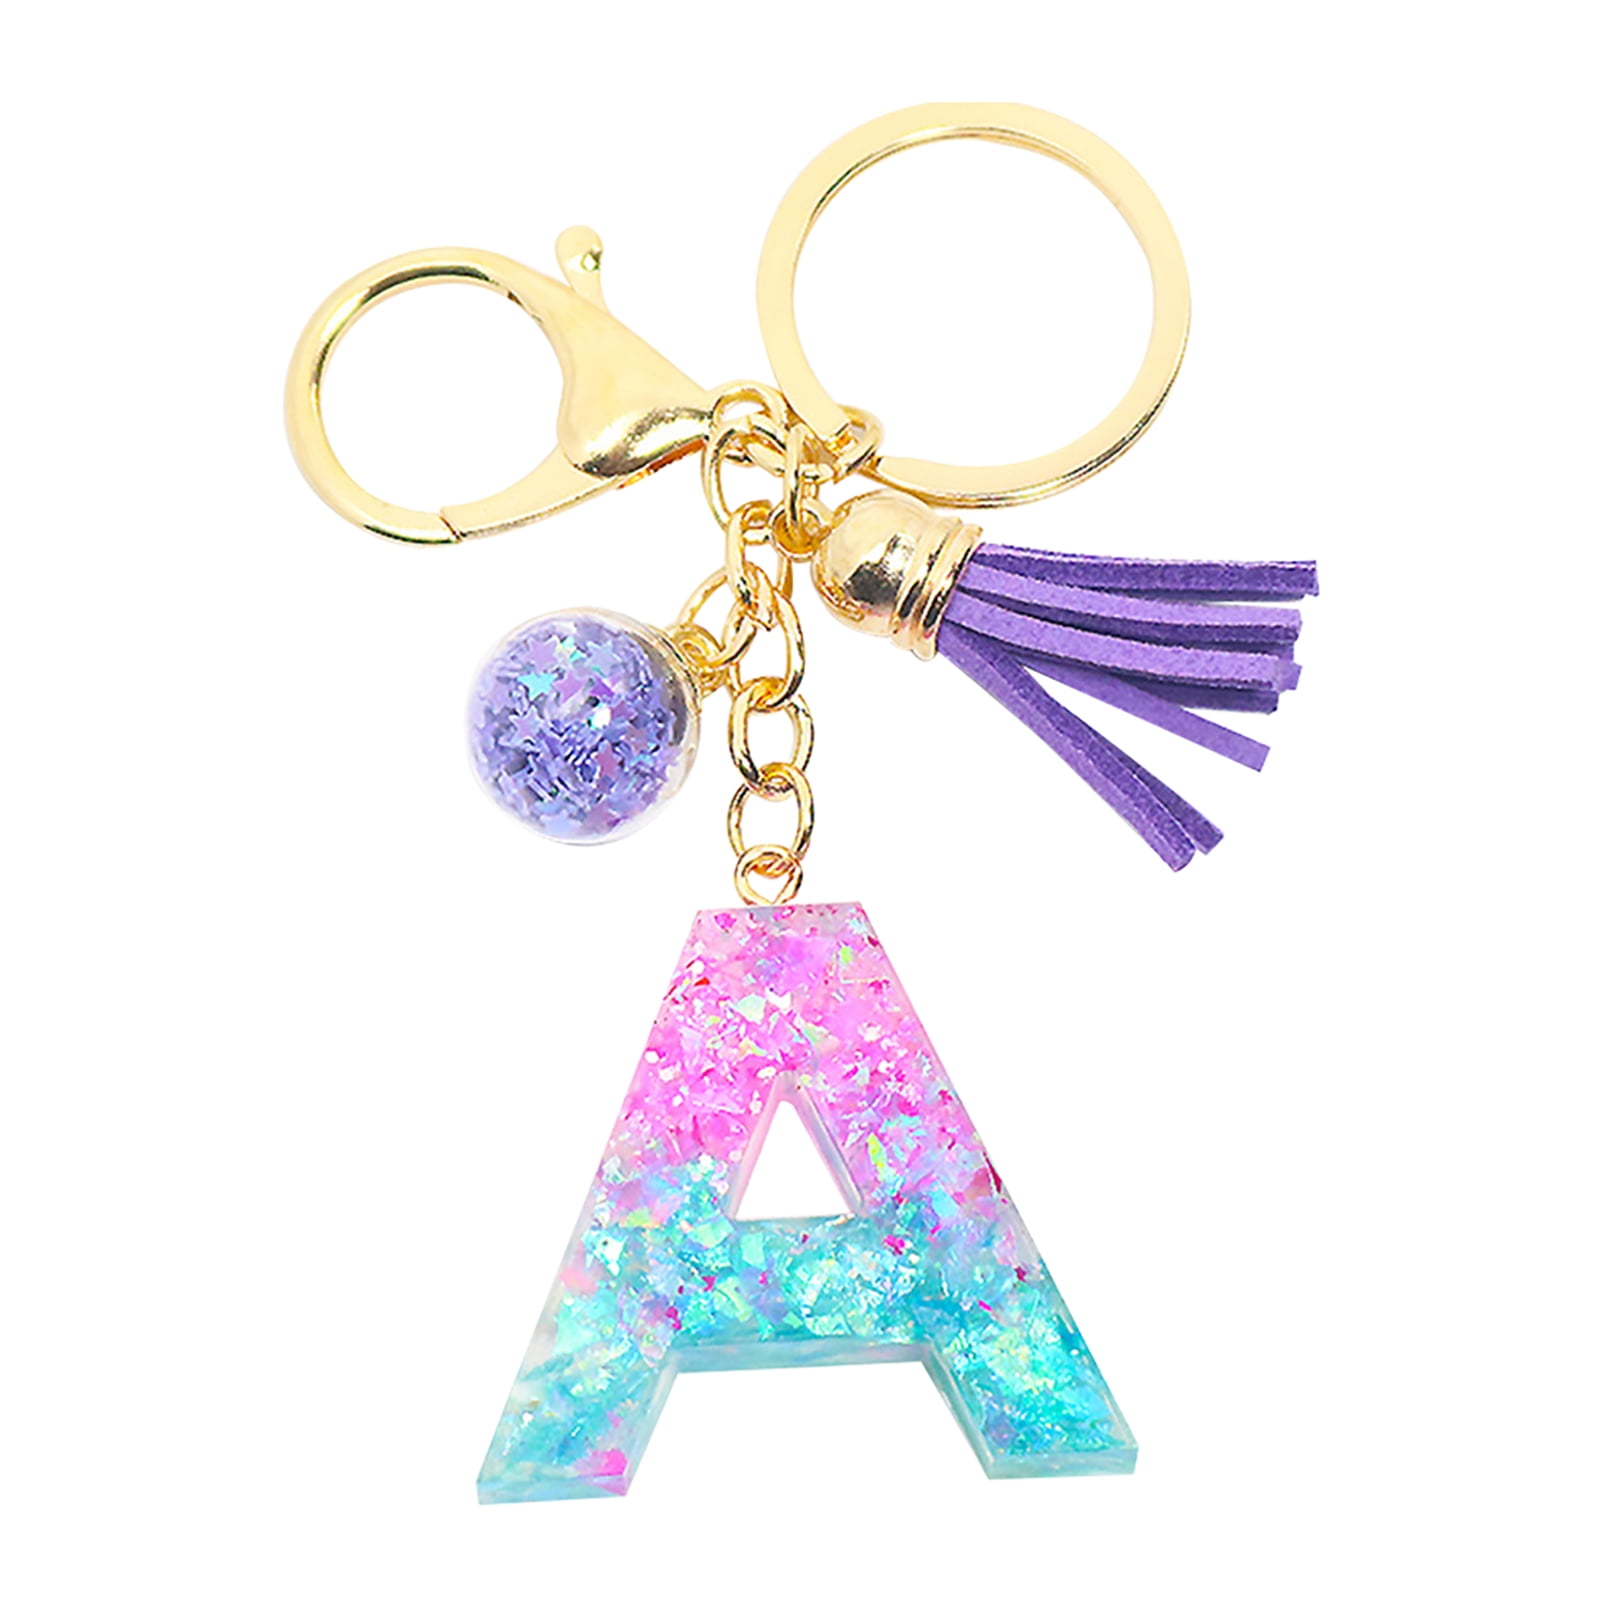 Triangle pendant keychain with optional tassel